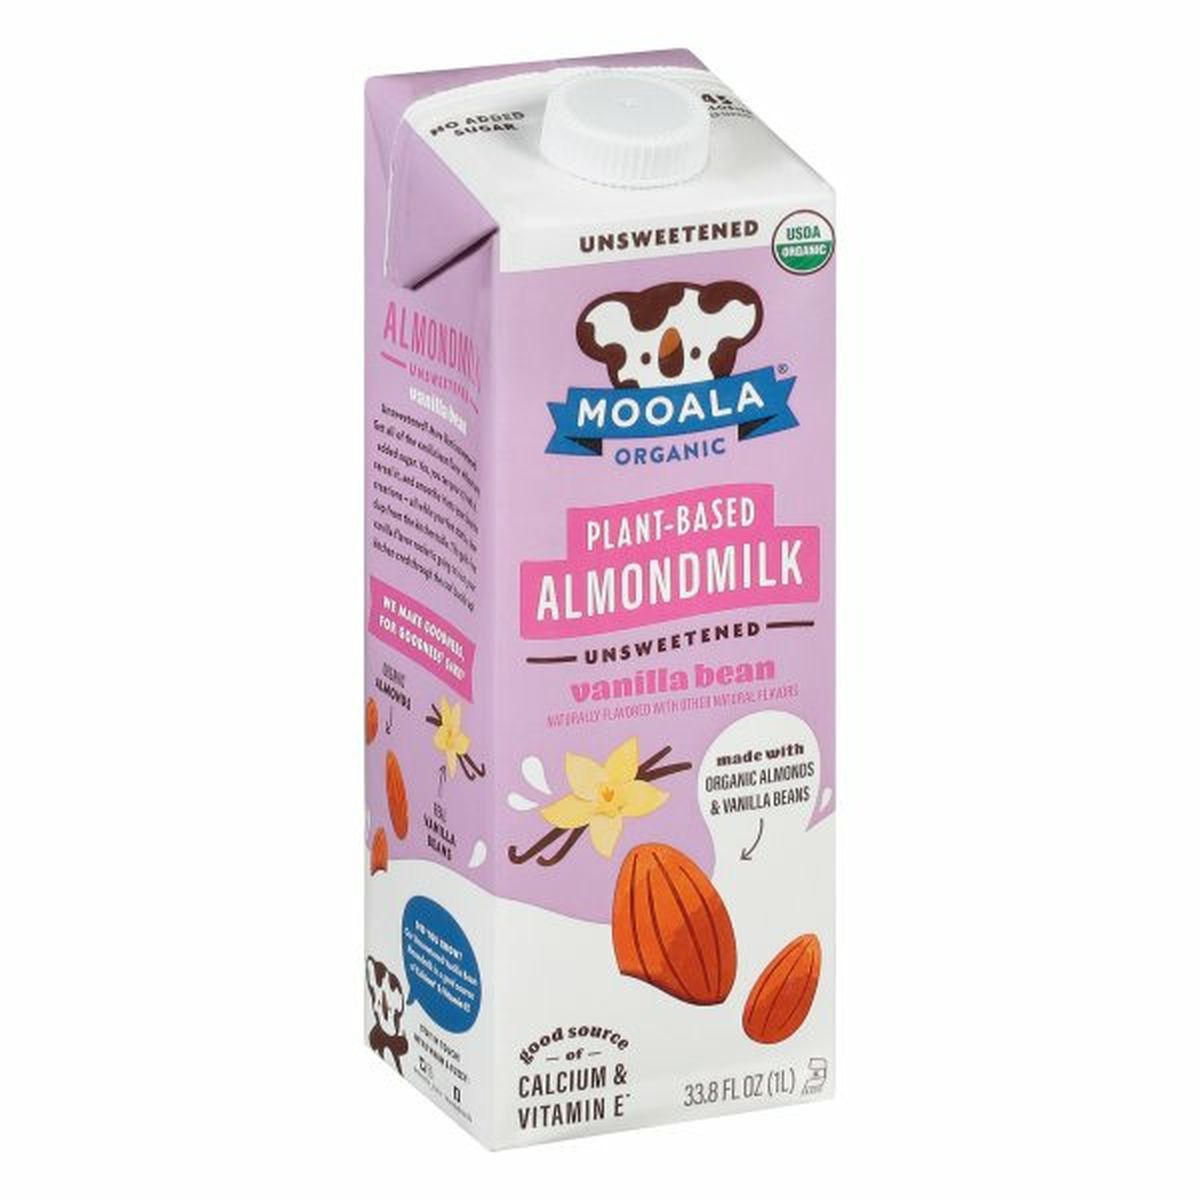 Calories in Mooala Organic Almondmilk, Vanilla Bean, Unsweetened